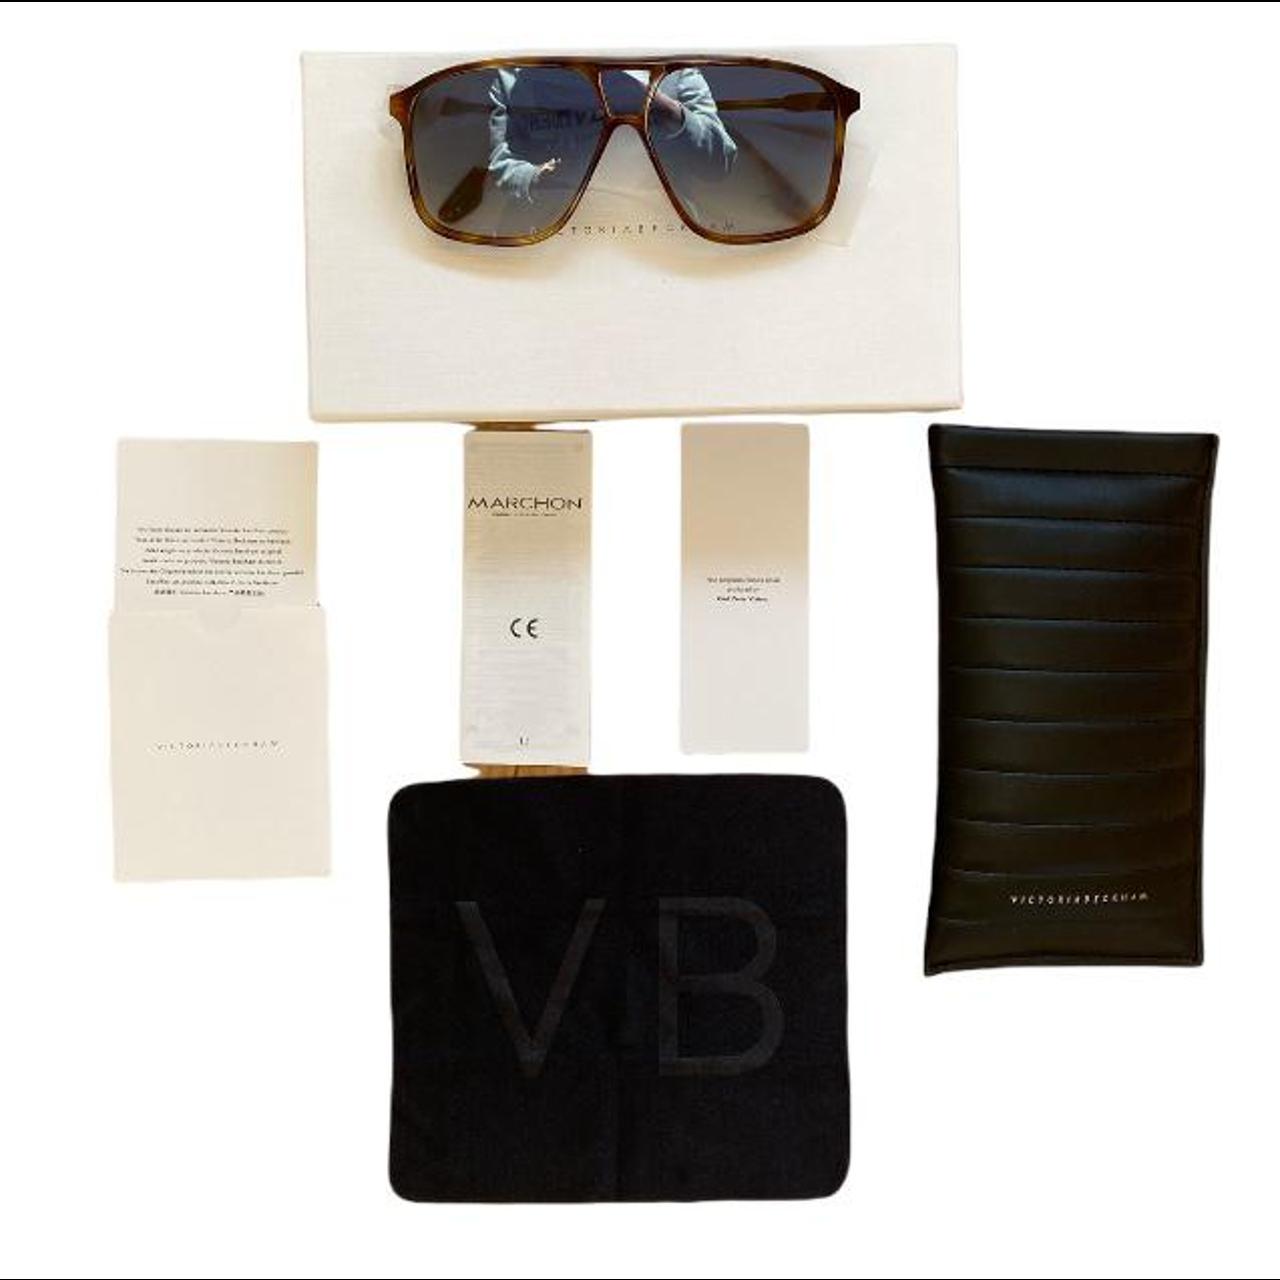 Product Image 1 - Victoria Beckham Navigator tortoiseshell sunglasses.